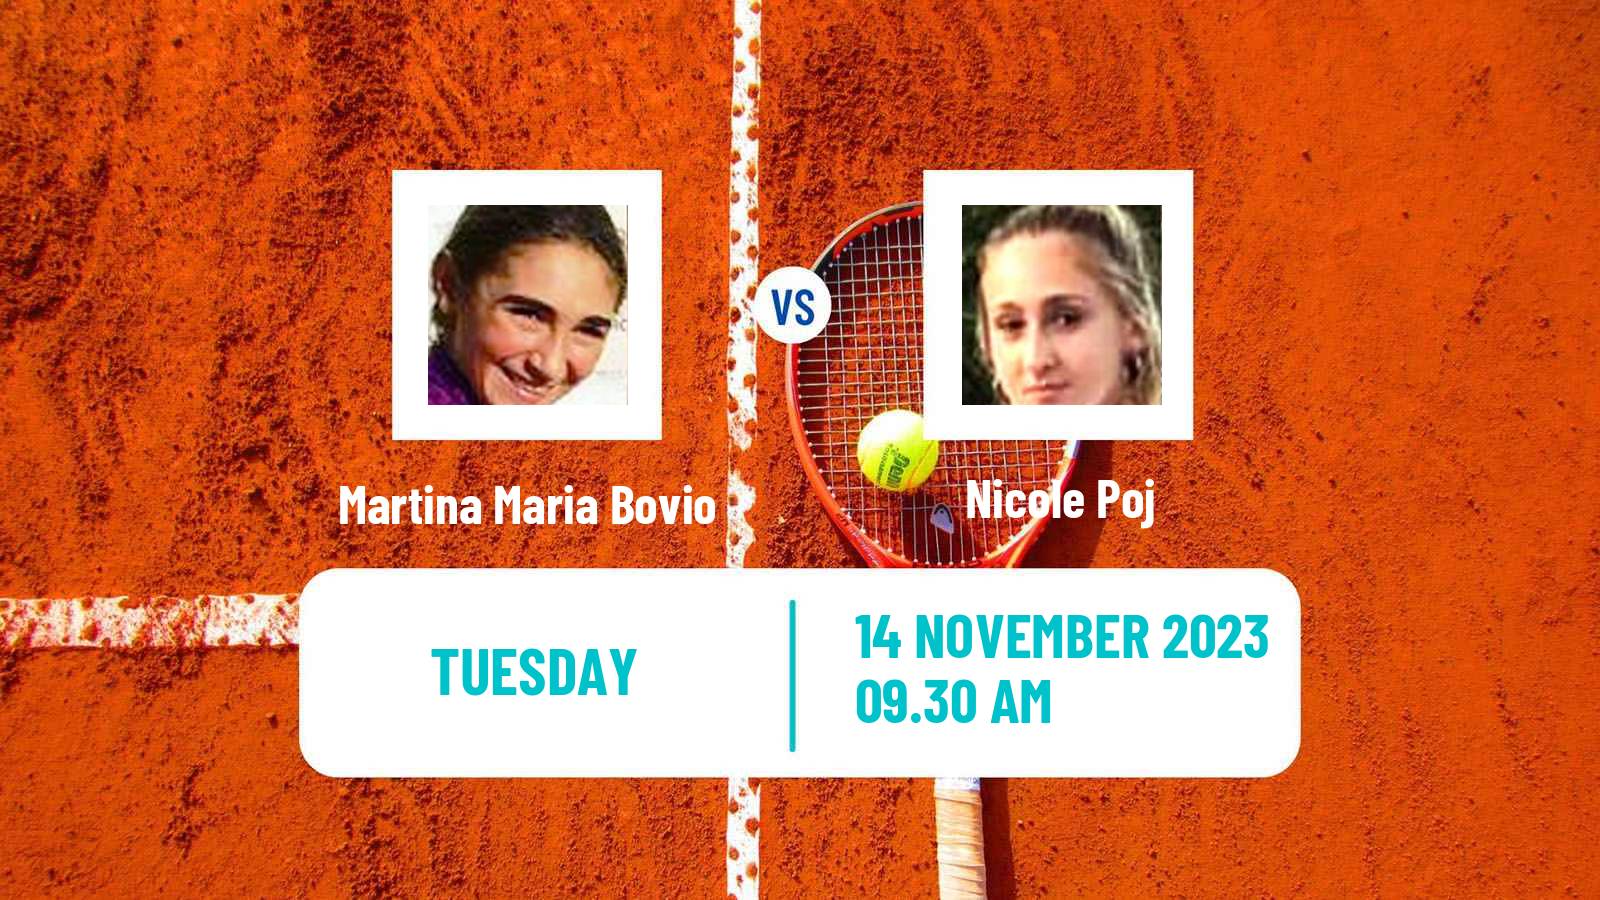 Tennis ITF W15 Buenos Aires 2 Women Martina Maria Bovio - Nicole Poj